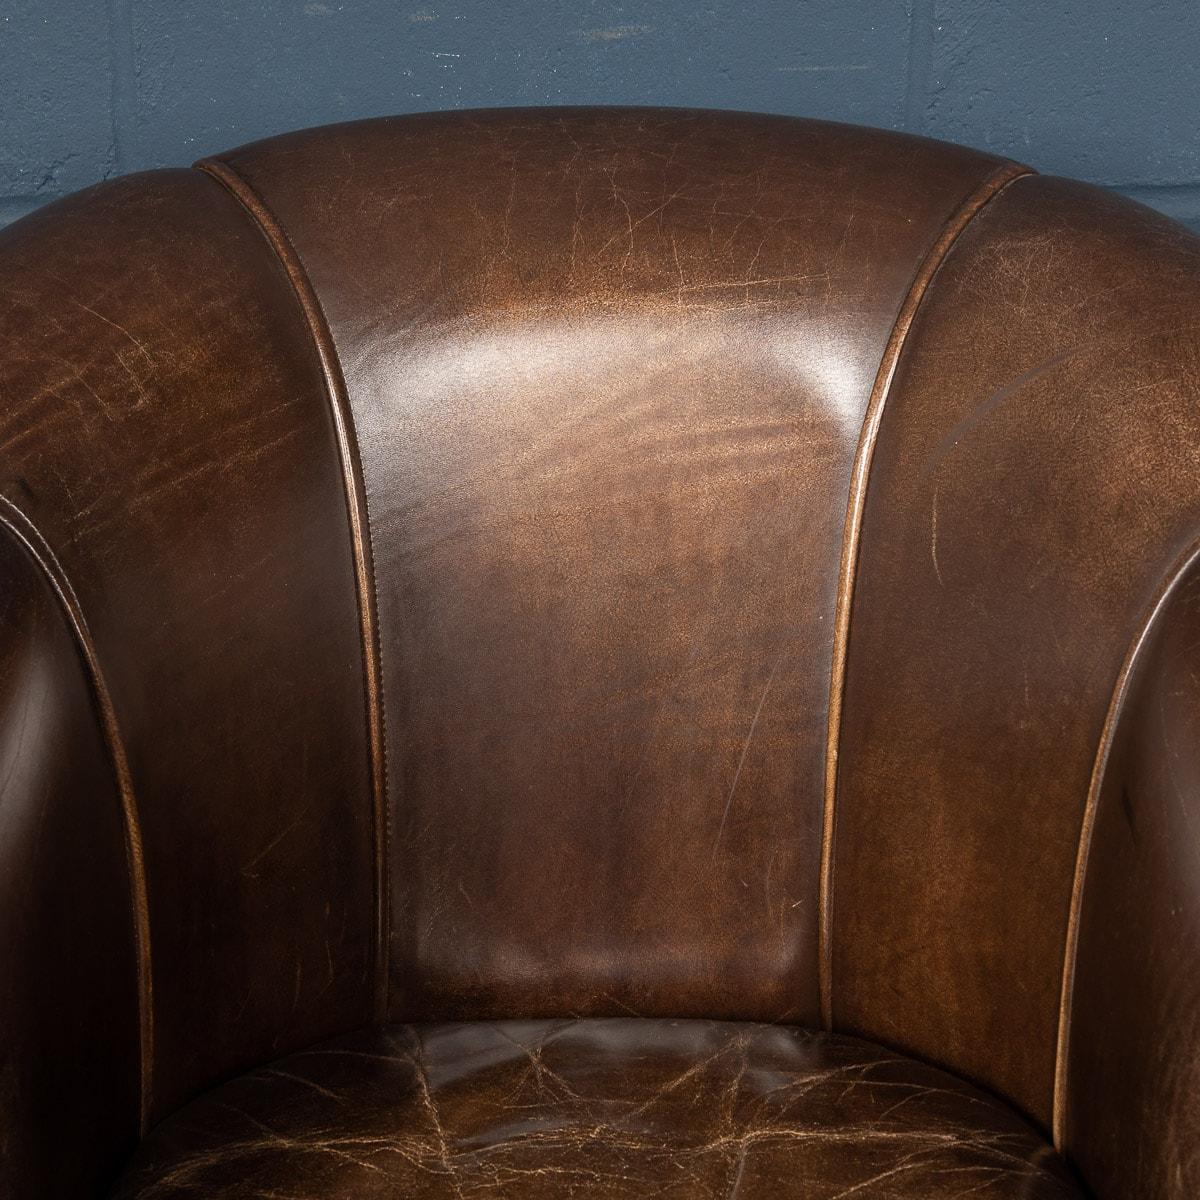 20th Century Dutch Sheepskin Leather Tub Chairs 2